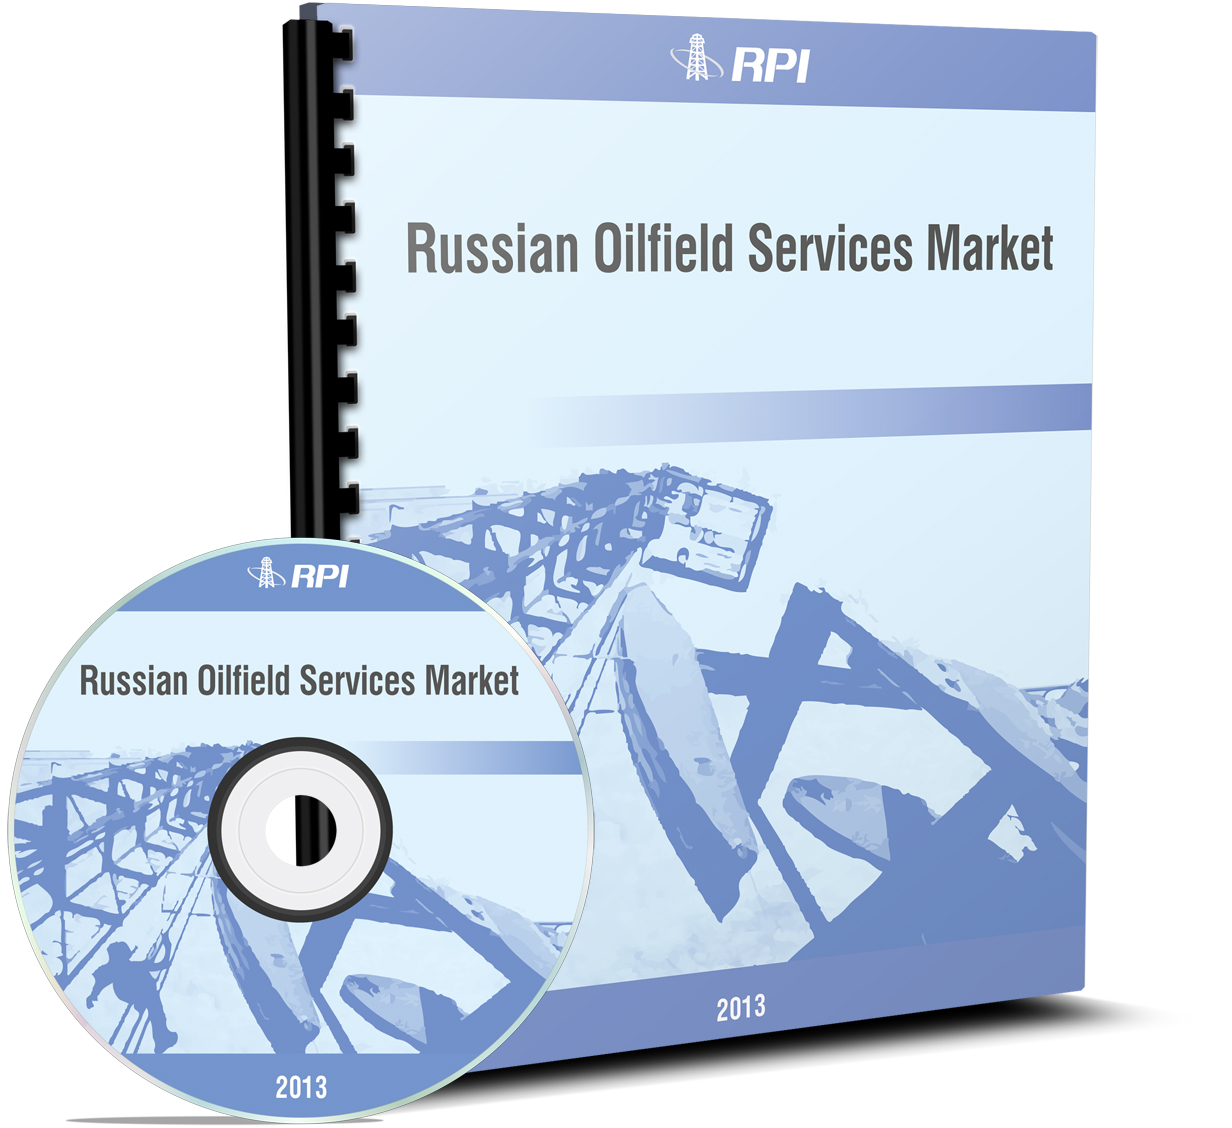 Russian Oilfield Services Market 2013